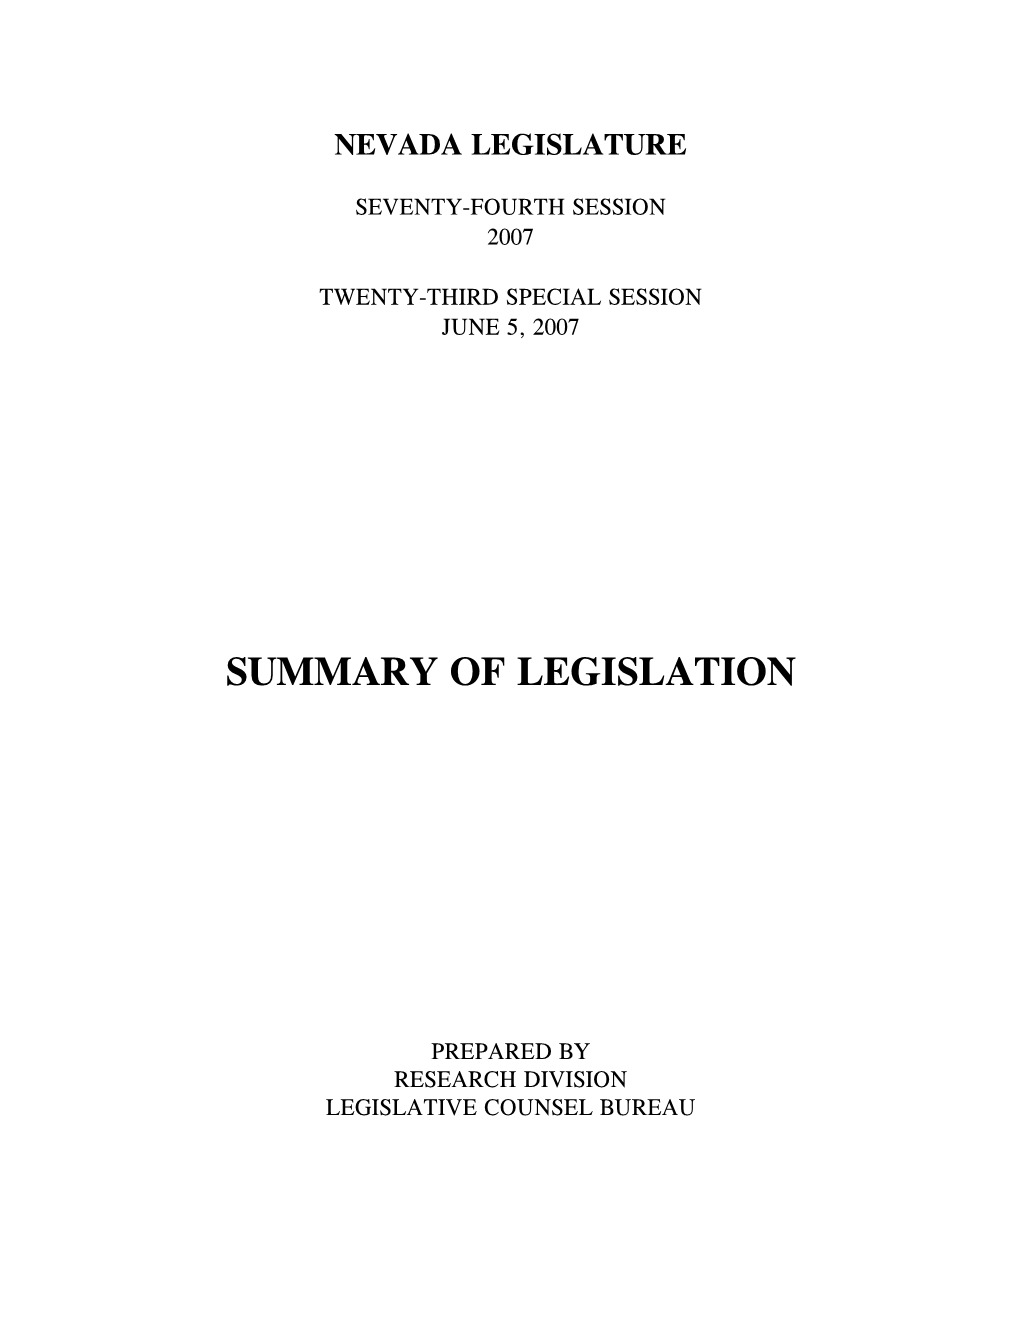 2007 Summary of Legislation